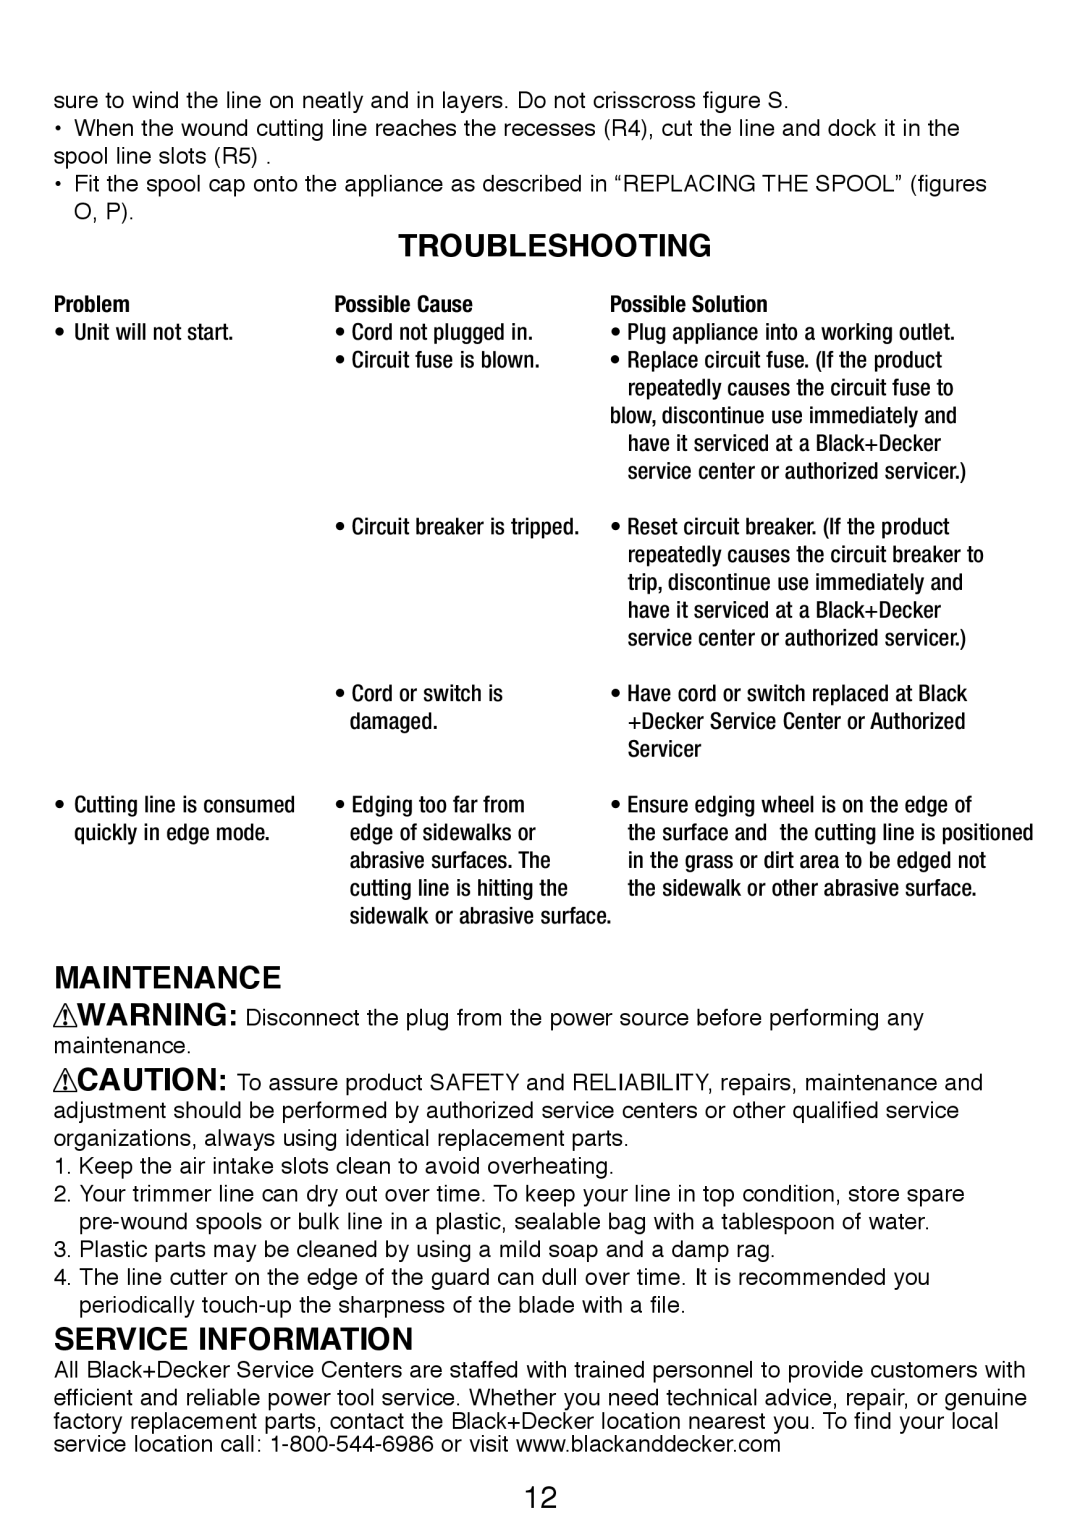 Black & Decker GH3000R instruction manual Troubleshooting, Maintenance, Service Information 